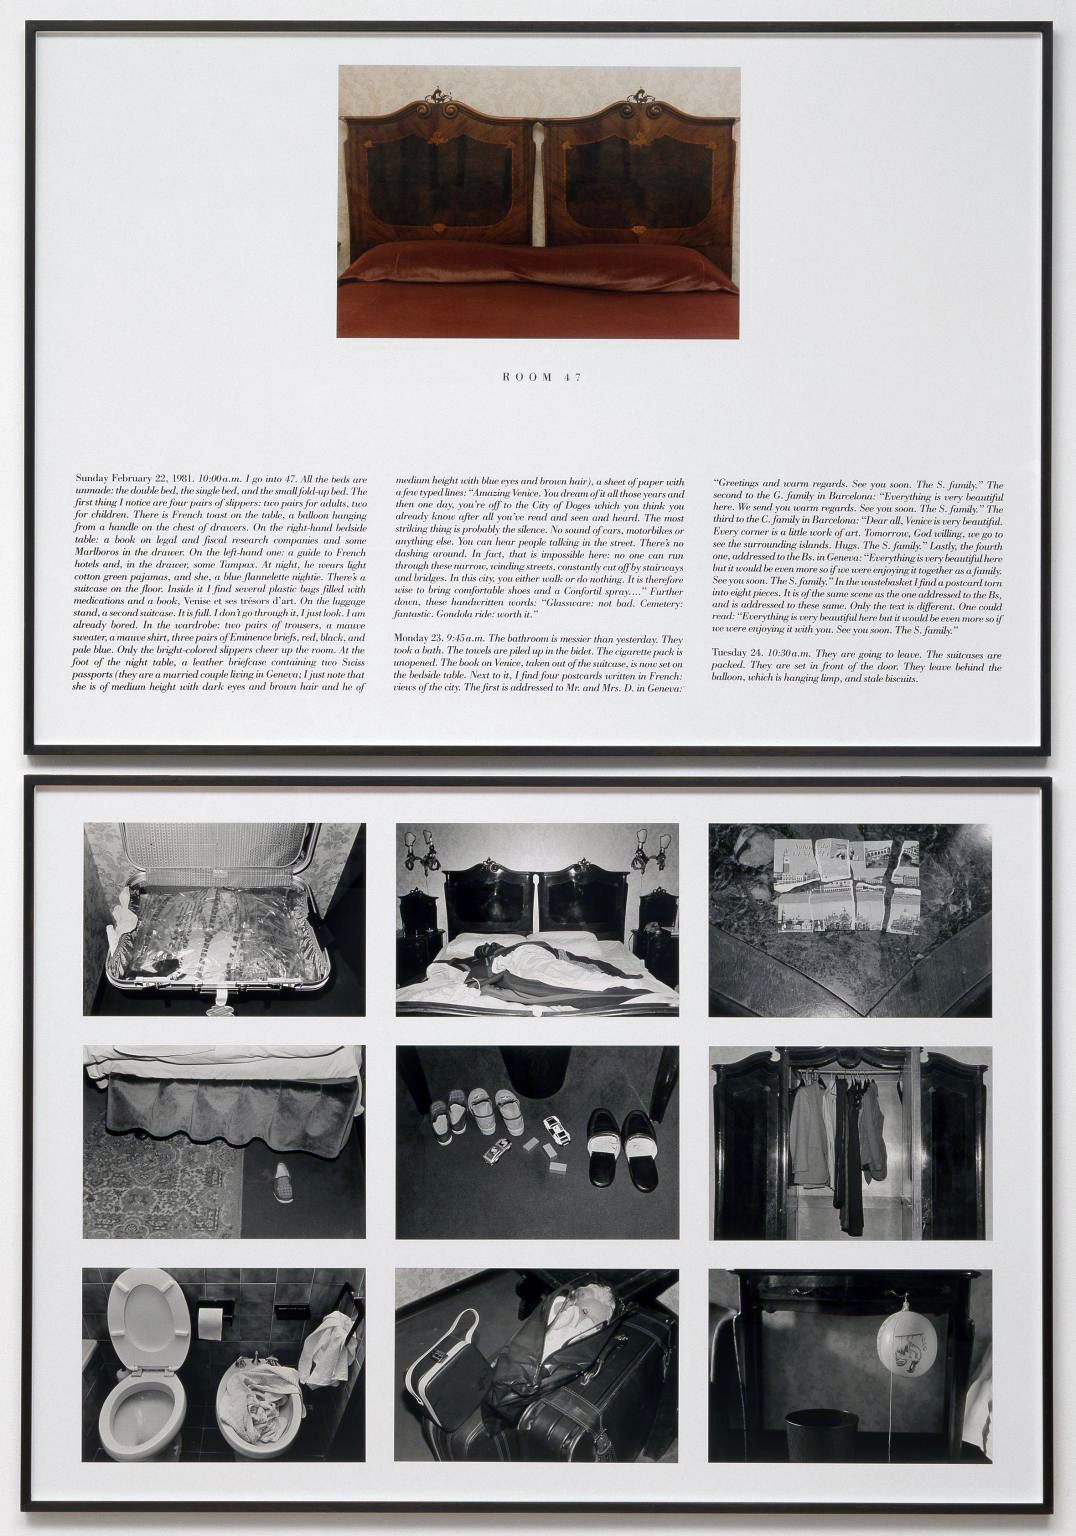 Exhibition Exposed Voyeurism, Surveillance and the Camera at Tate Modern, London Art Blart